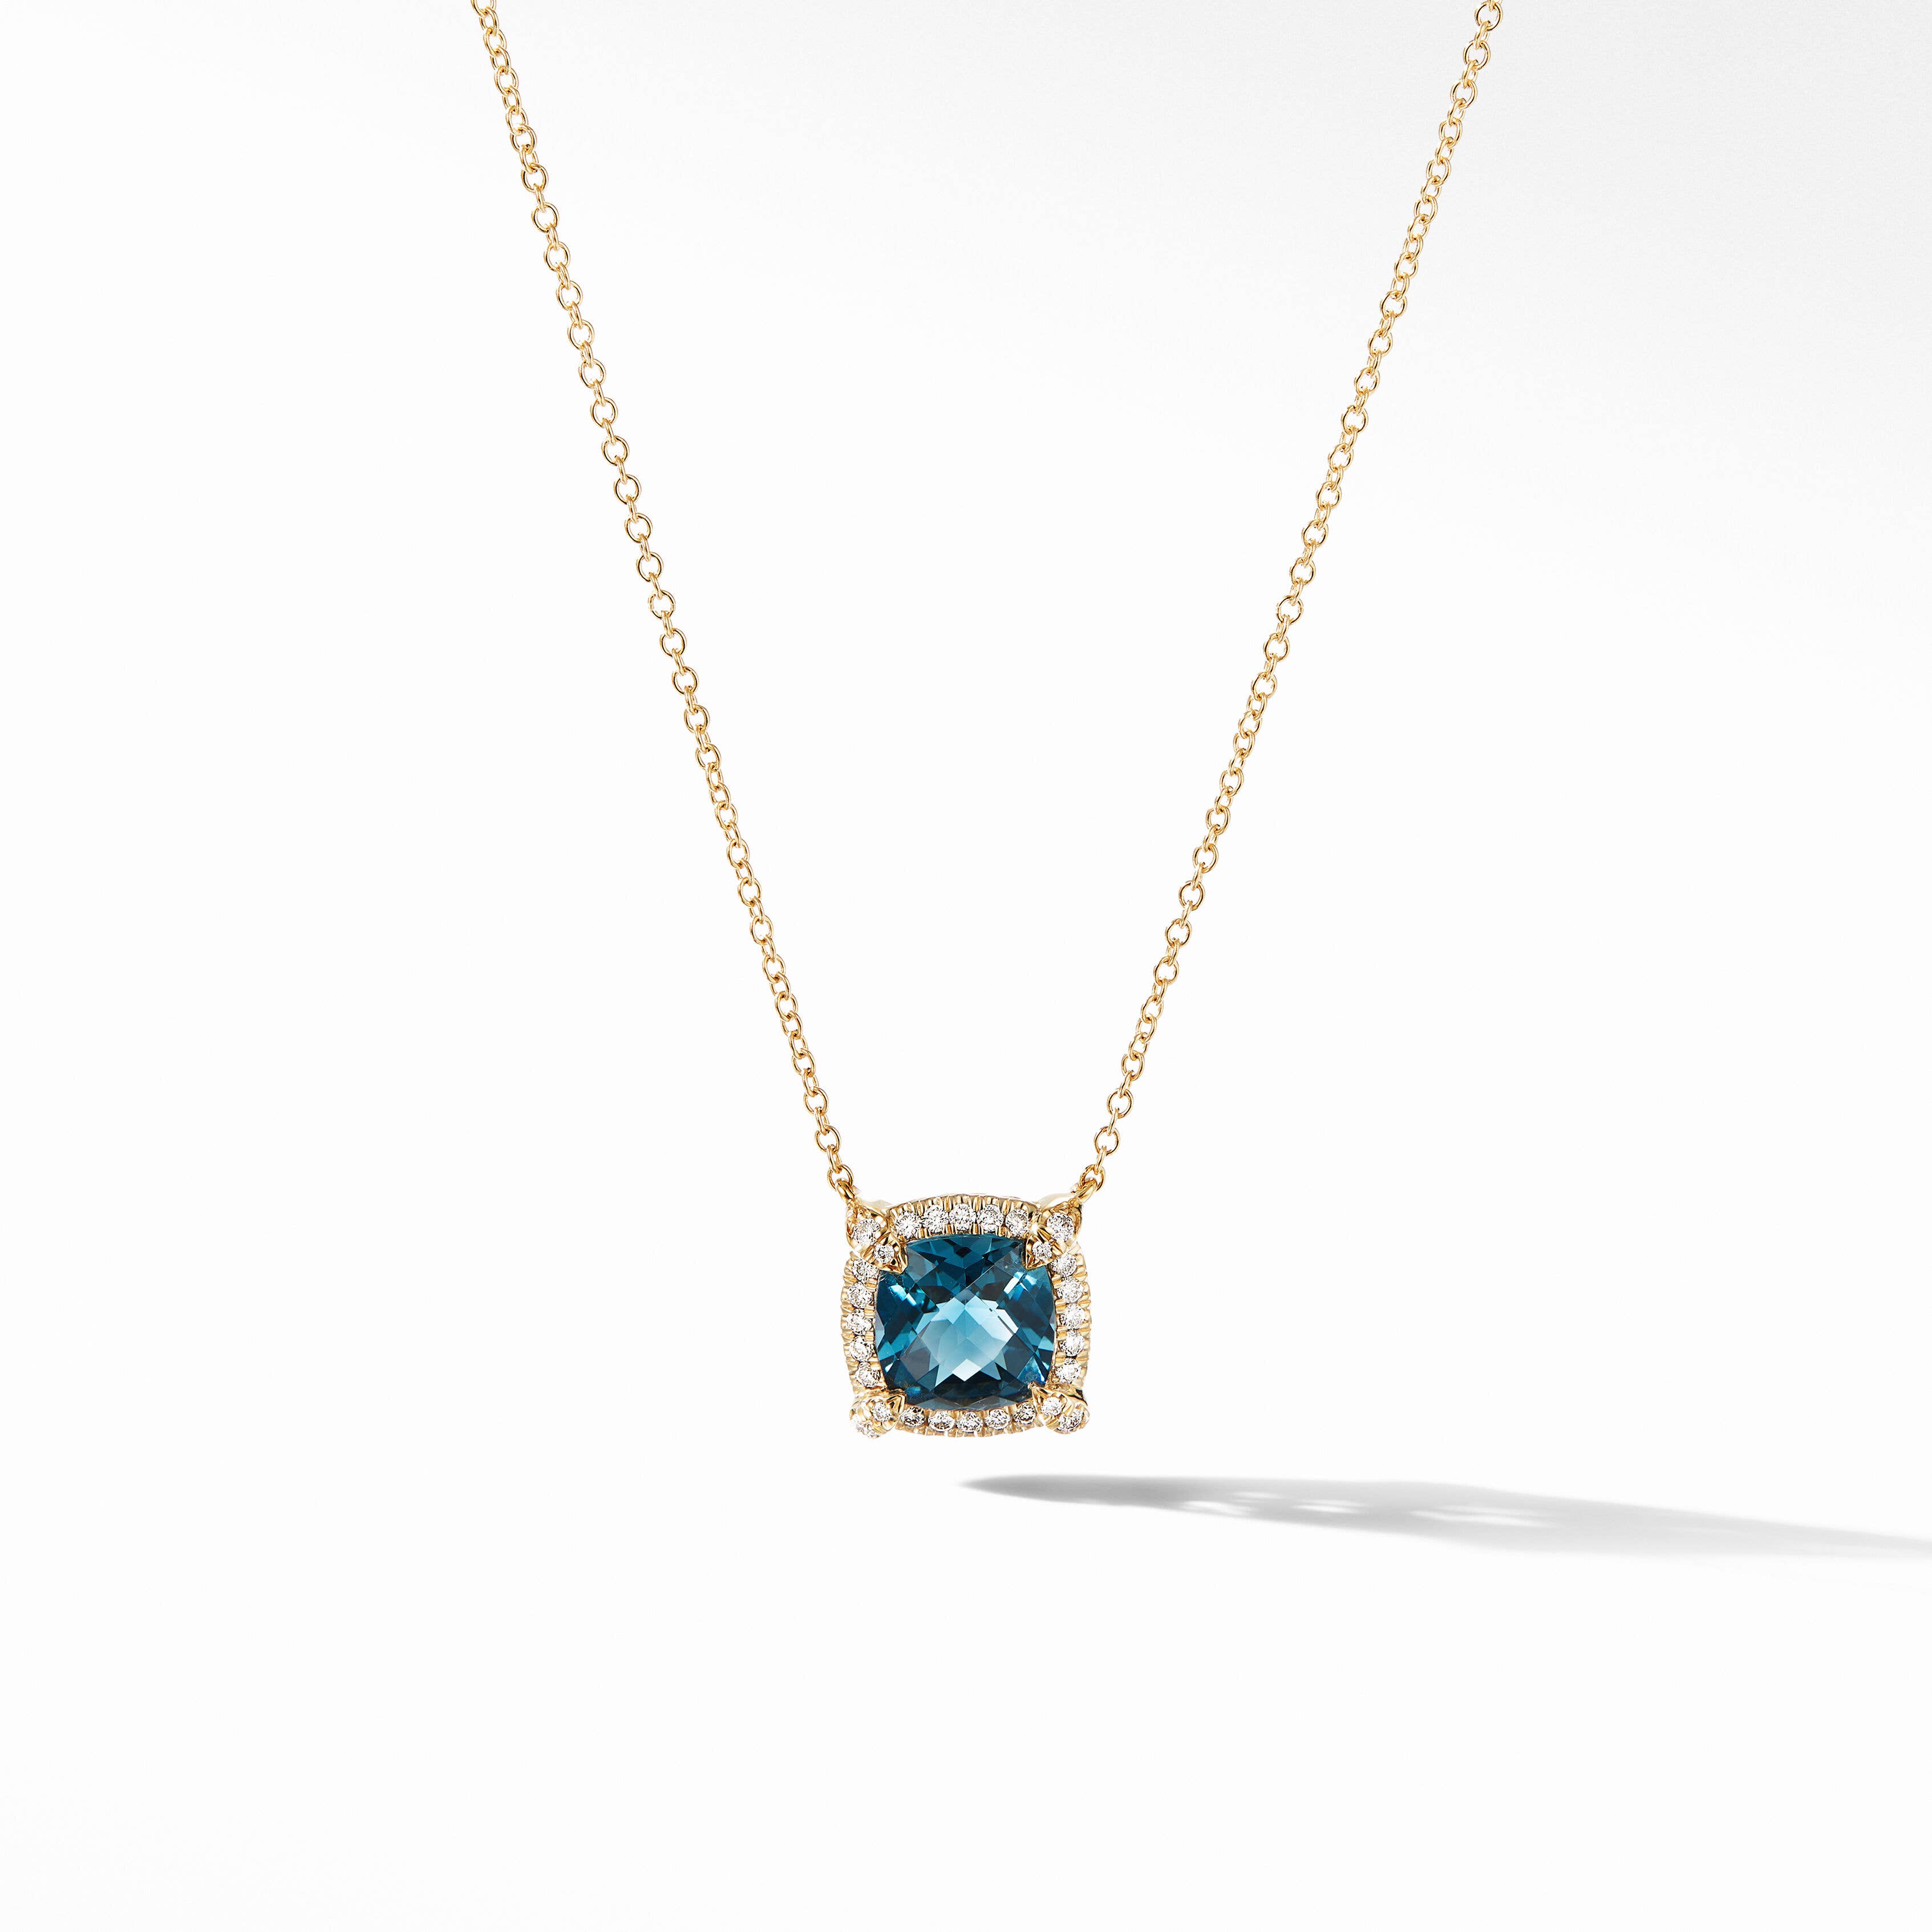 Petite Chatelaine® Pavé Bezel Pendant Necklace in 18K Yellow Gold with Hampton Blue Topaz and Diamonds